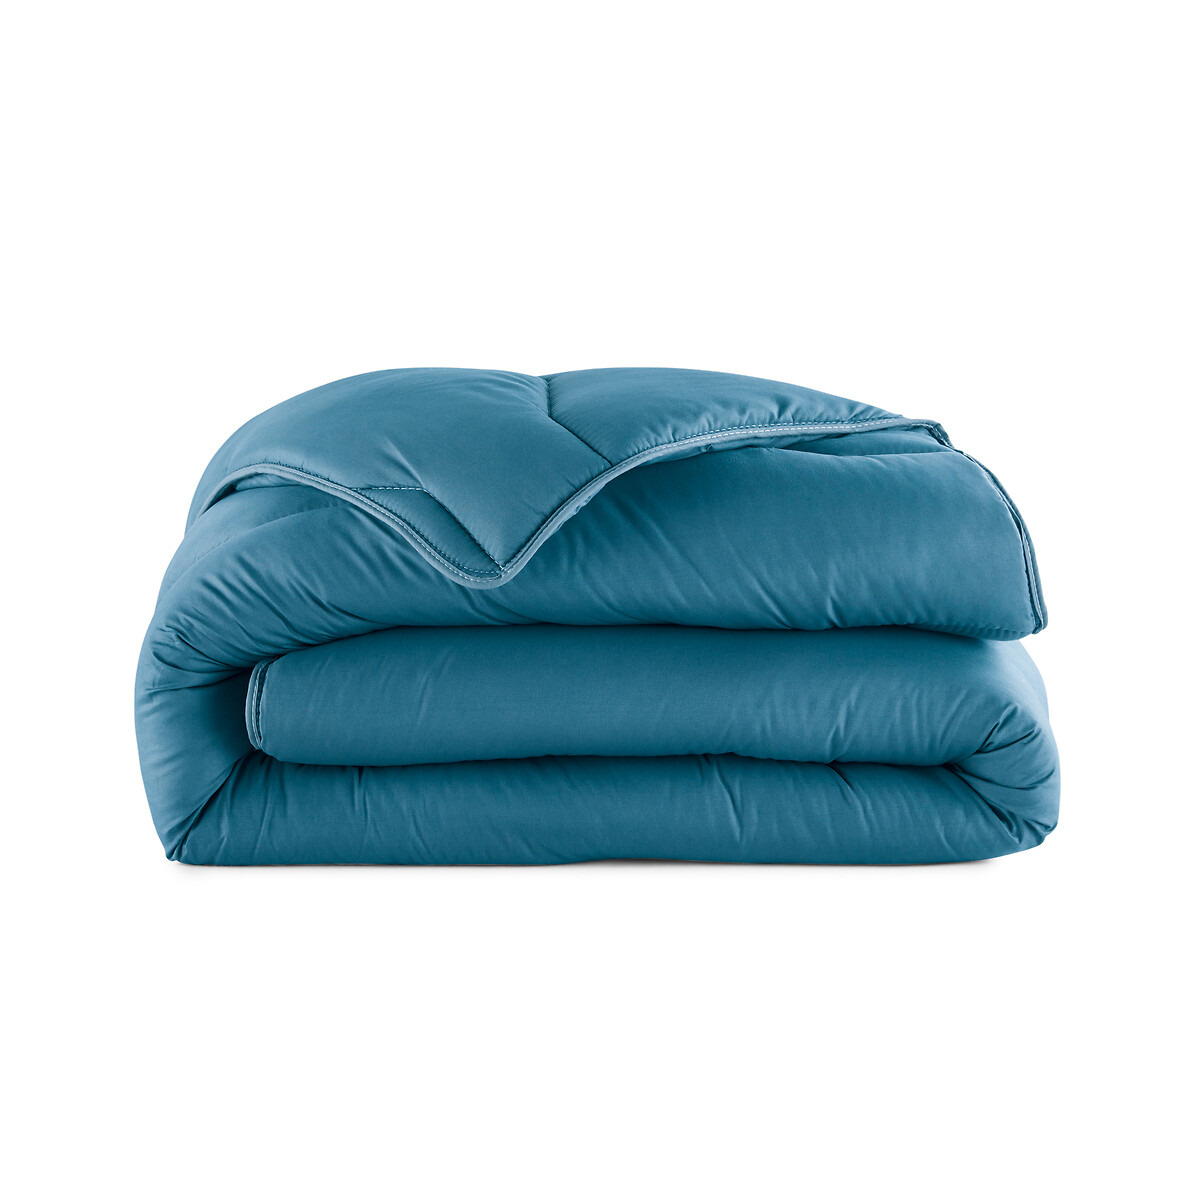 Одеяло LA REDOUTE INTERIEURS 100 полиэстер качество стандарт 300 гм 200 x 200 см синий, размер 200 x 200 см - фото 2